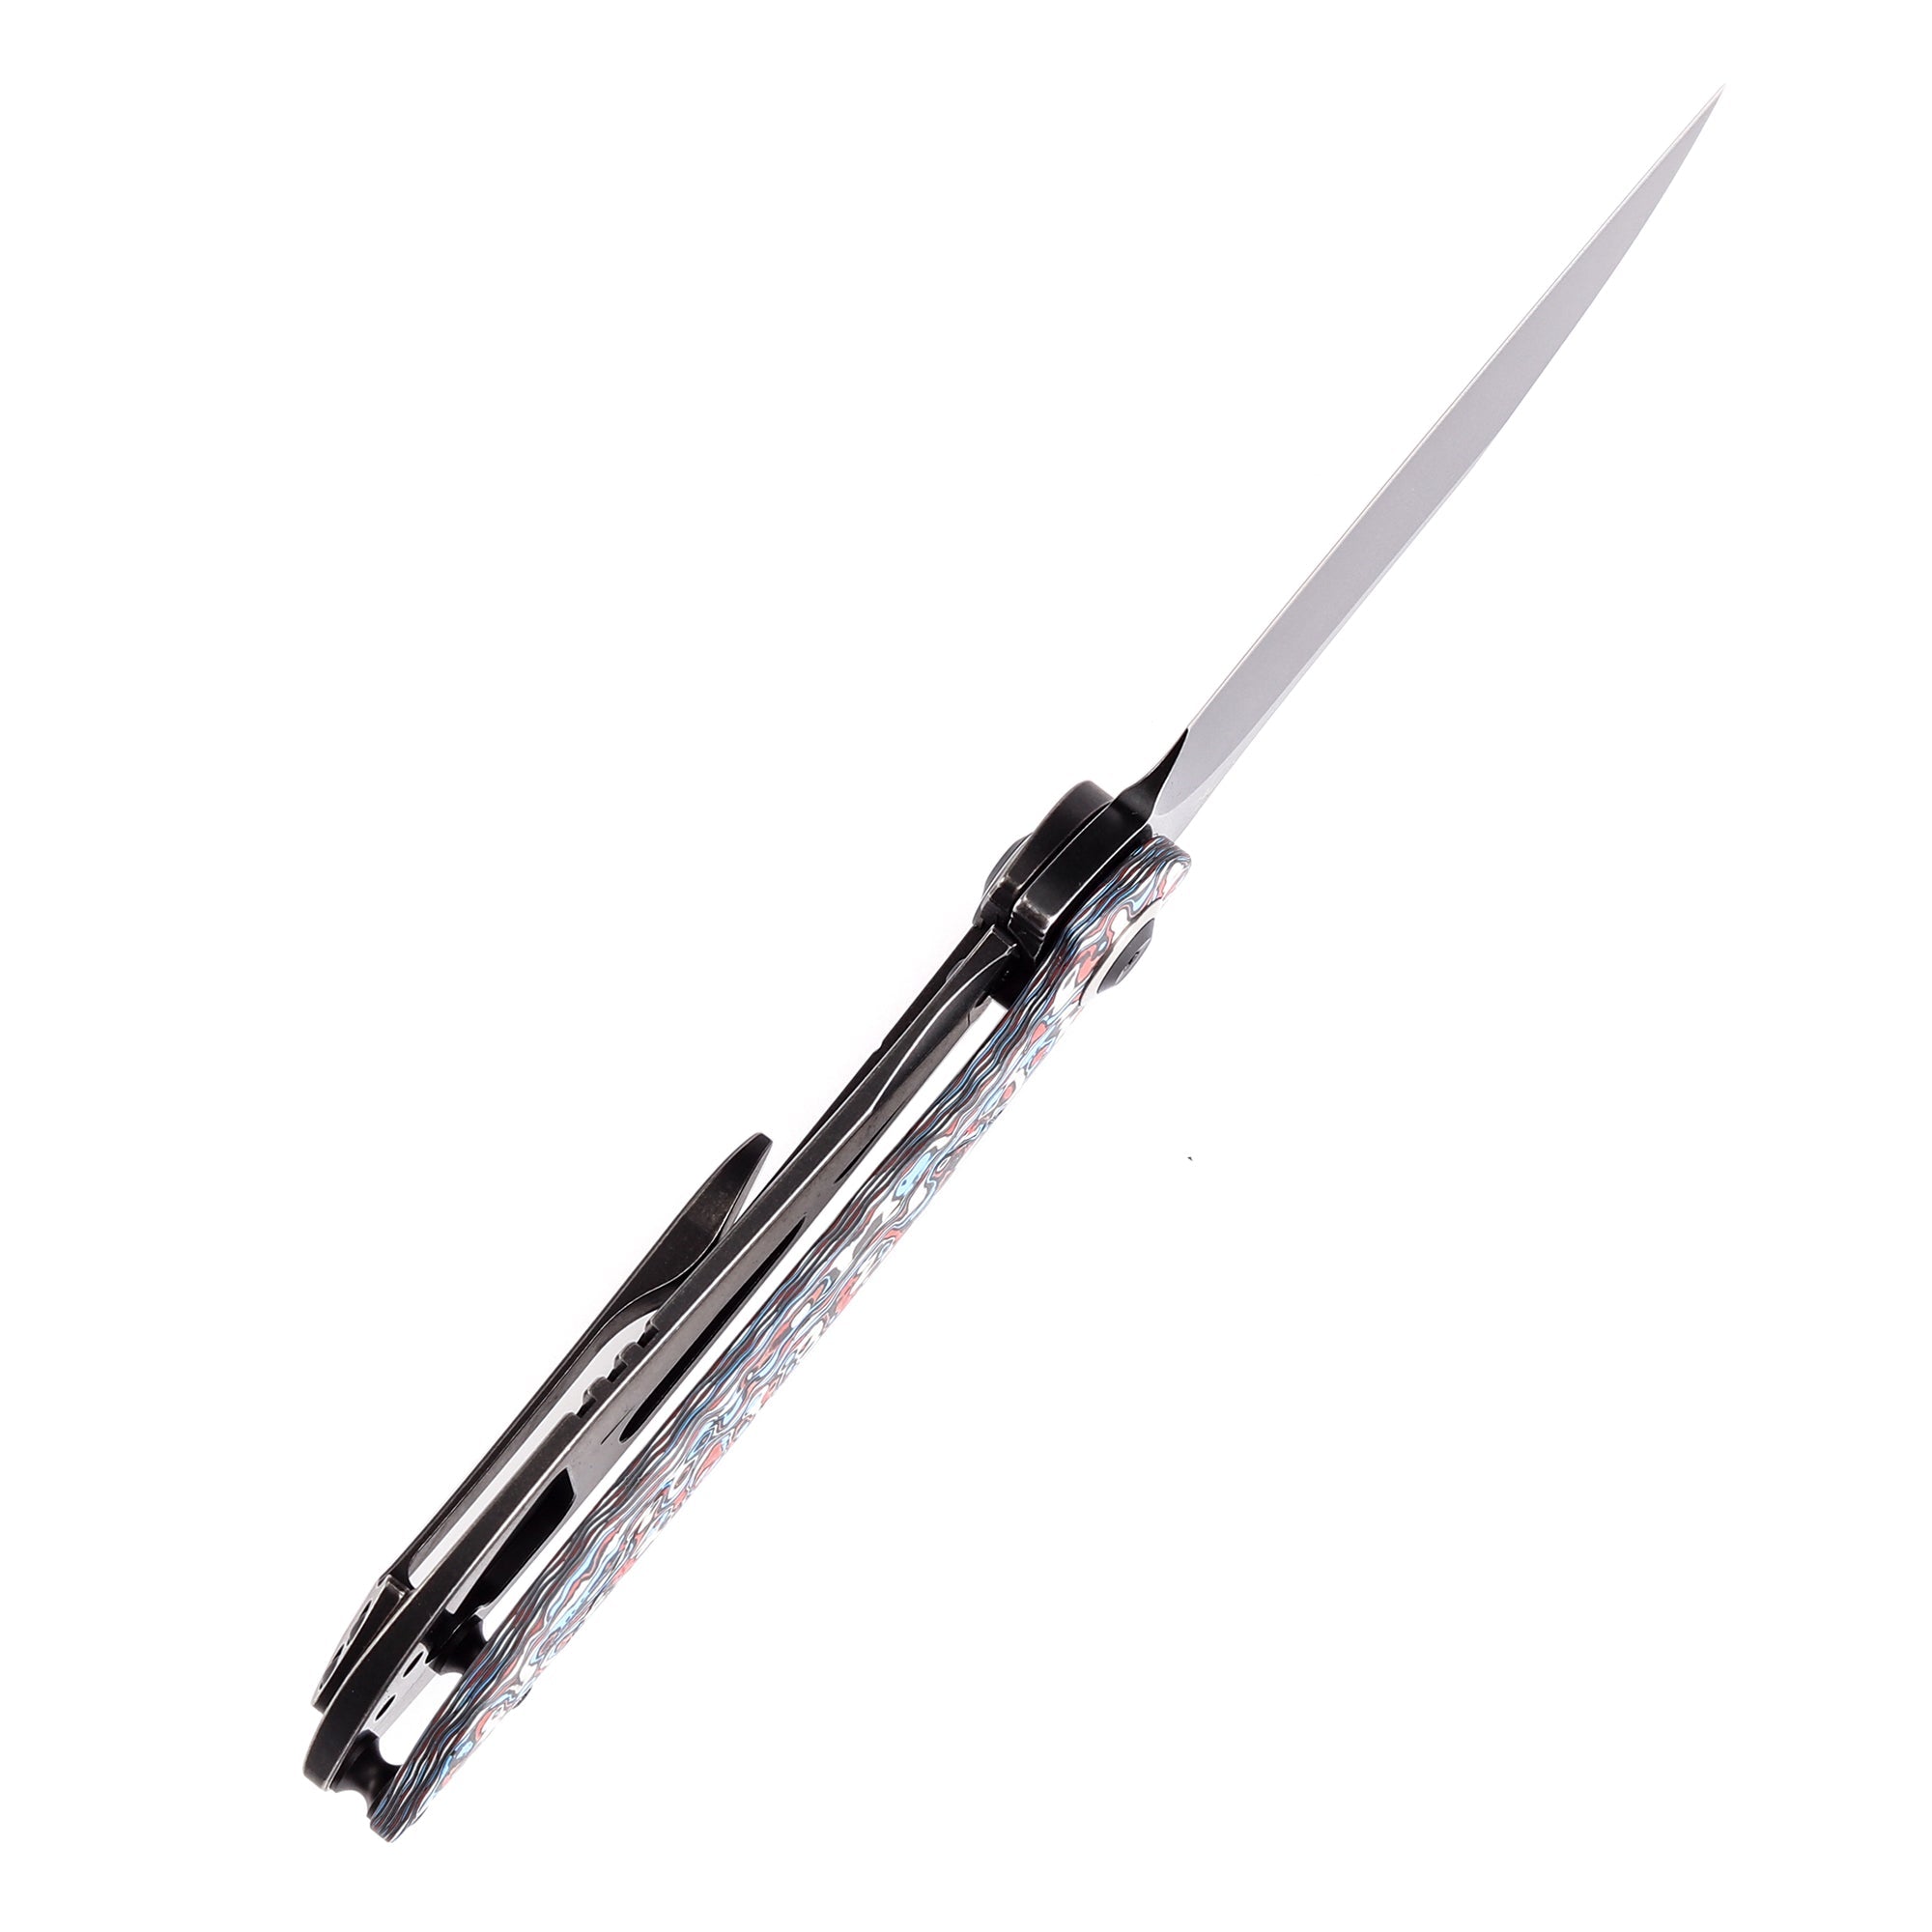 Kansept Prometheus K1040A2 CPM-S35VN Blade Carbon Fiber Titanium Handle Folding Knife